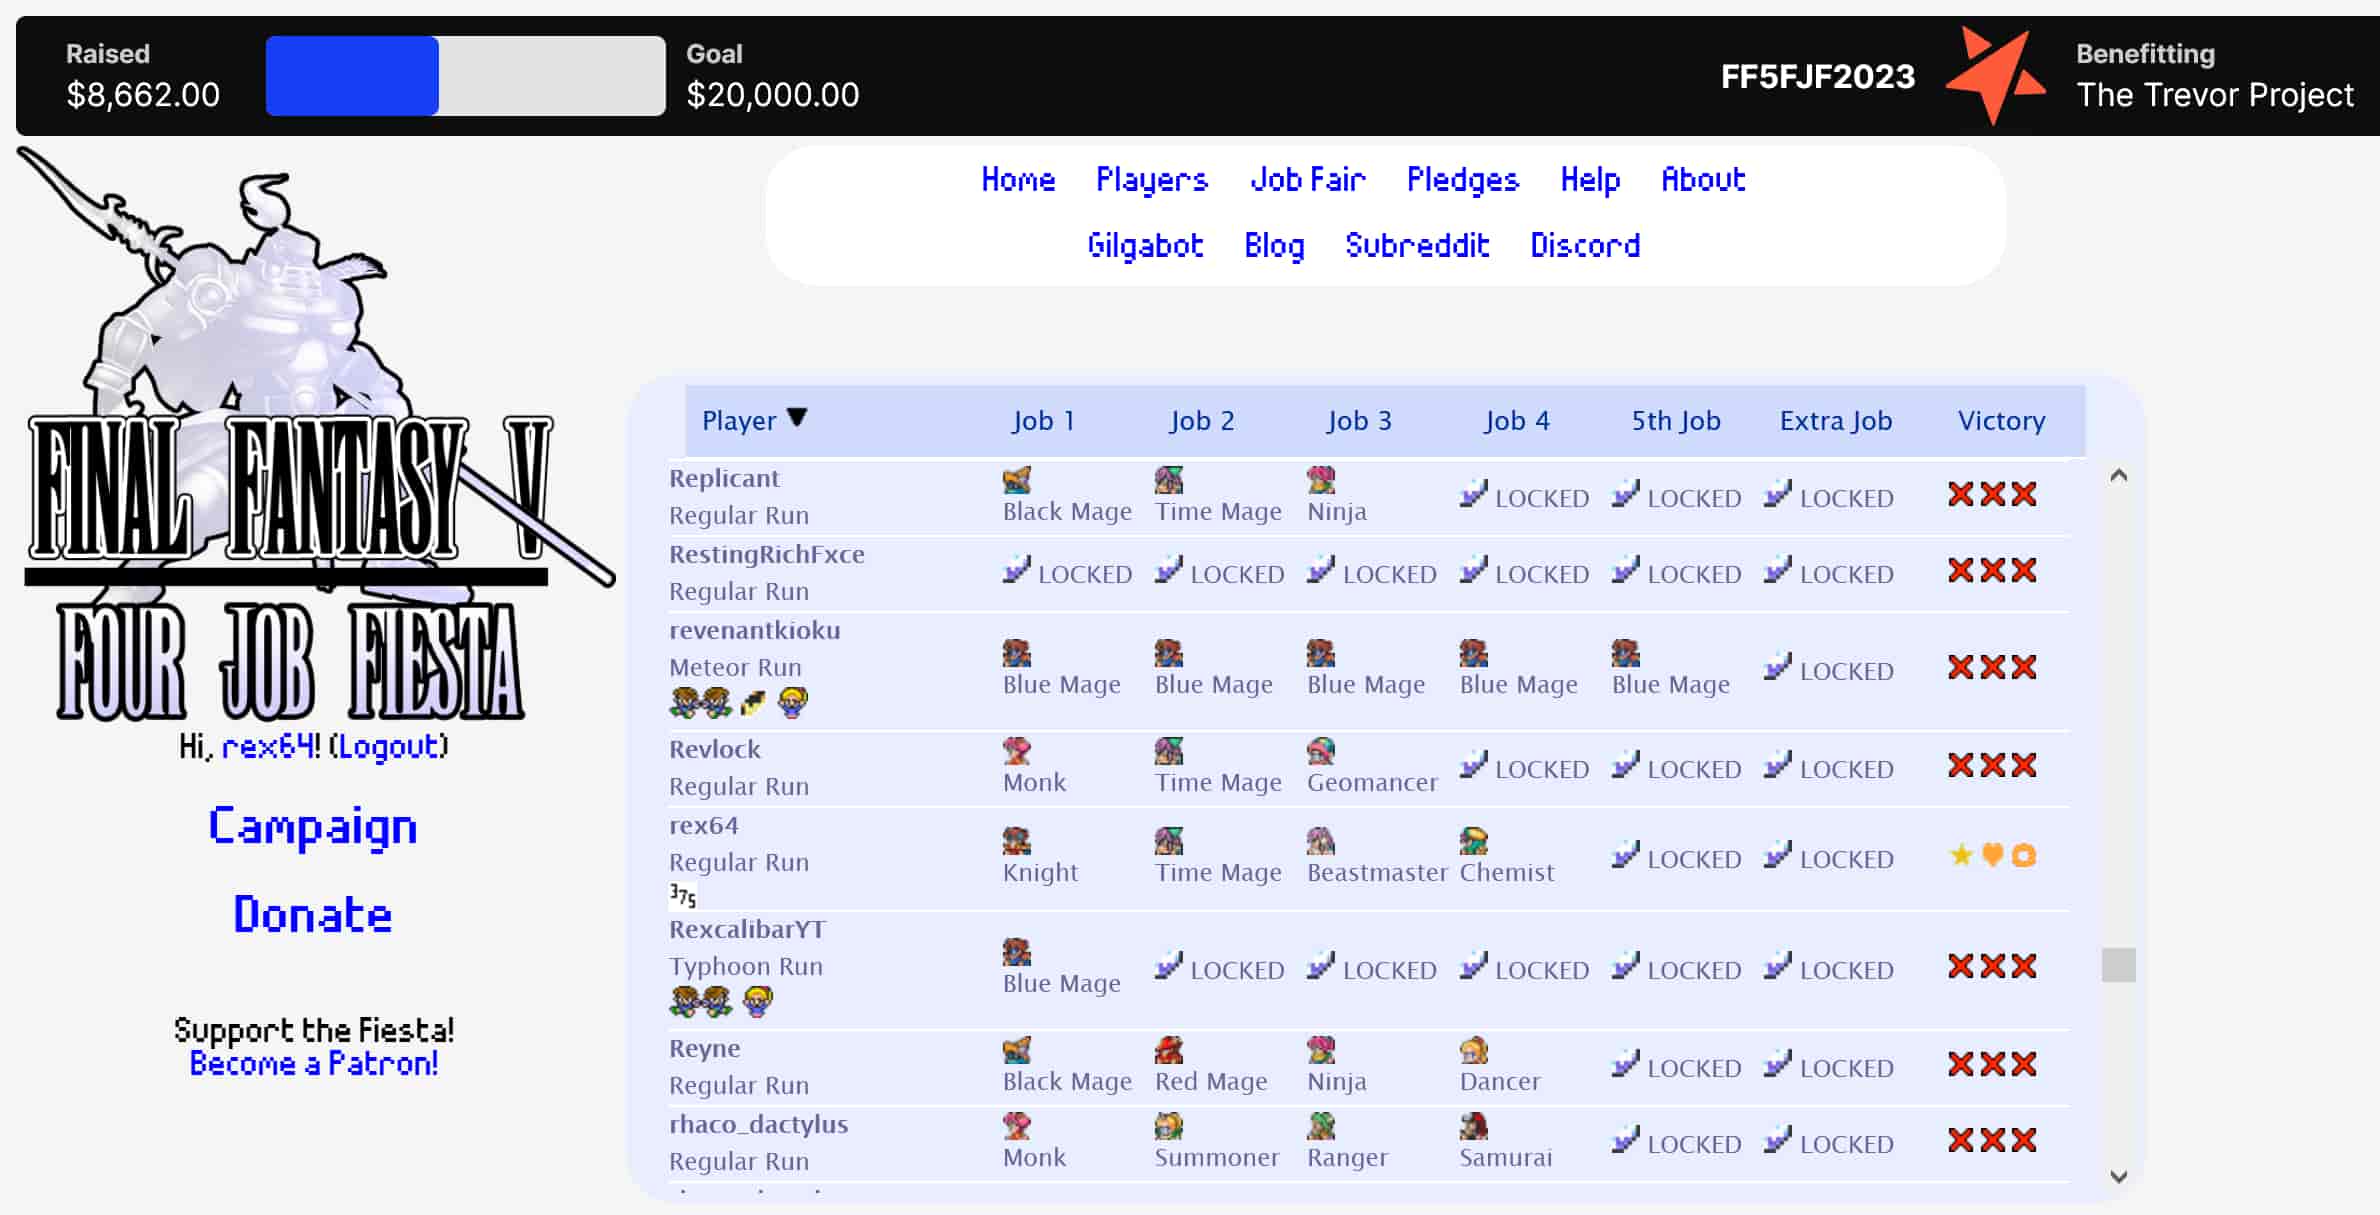 A screenshot of the Final Fantasy V Four Job Fiesta 2023 homepage